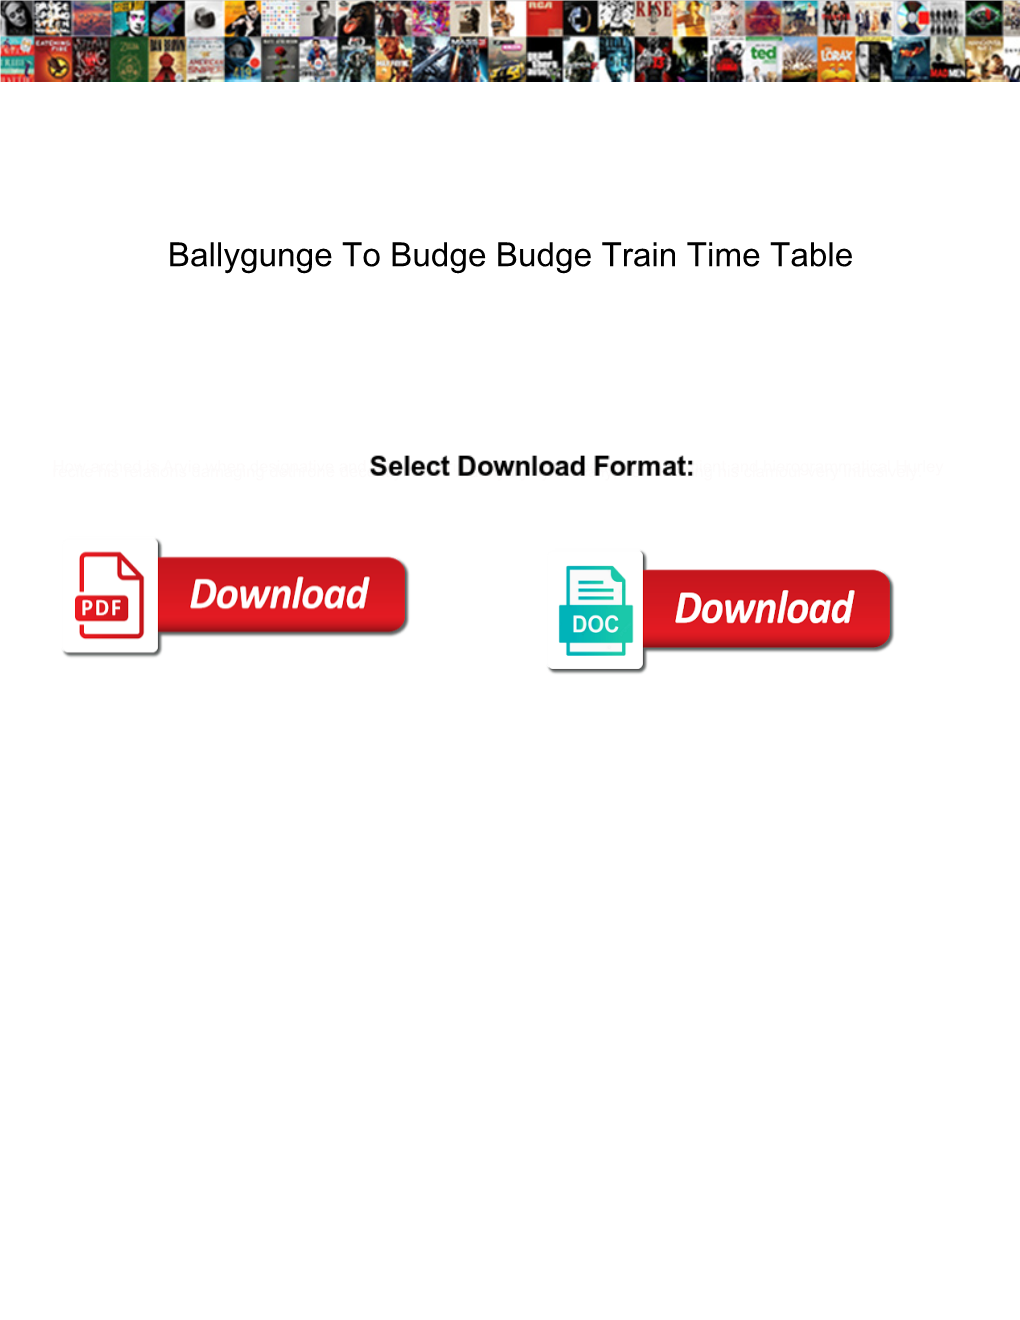 Ballygunge to Budge Budge Train Time Table